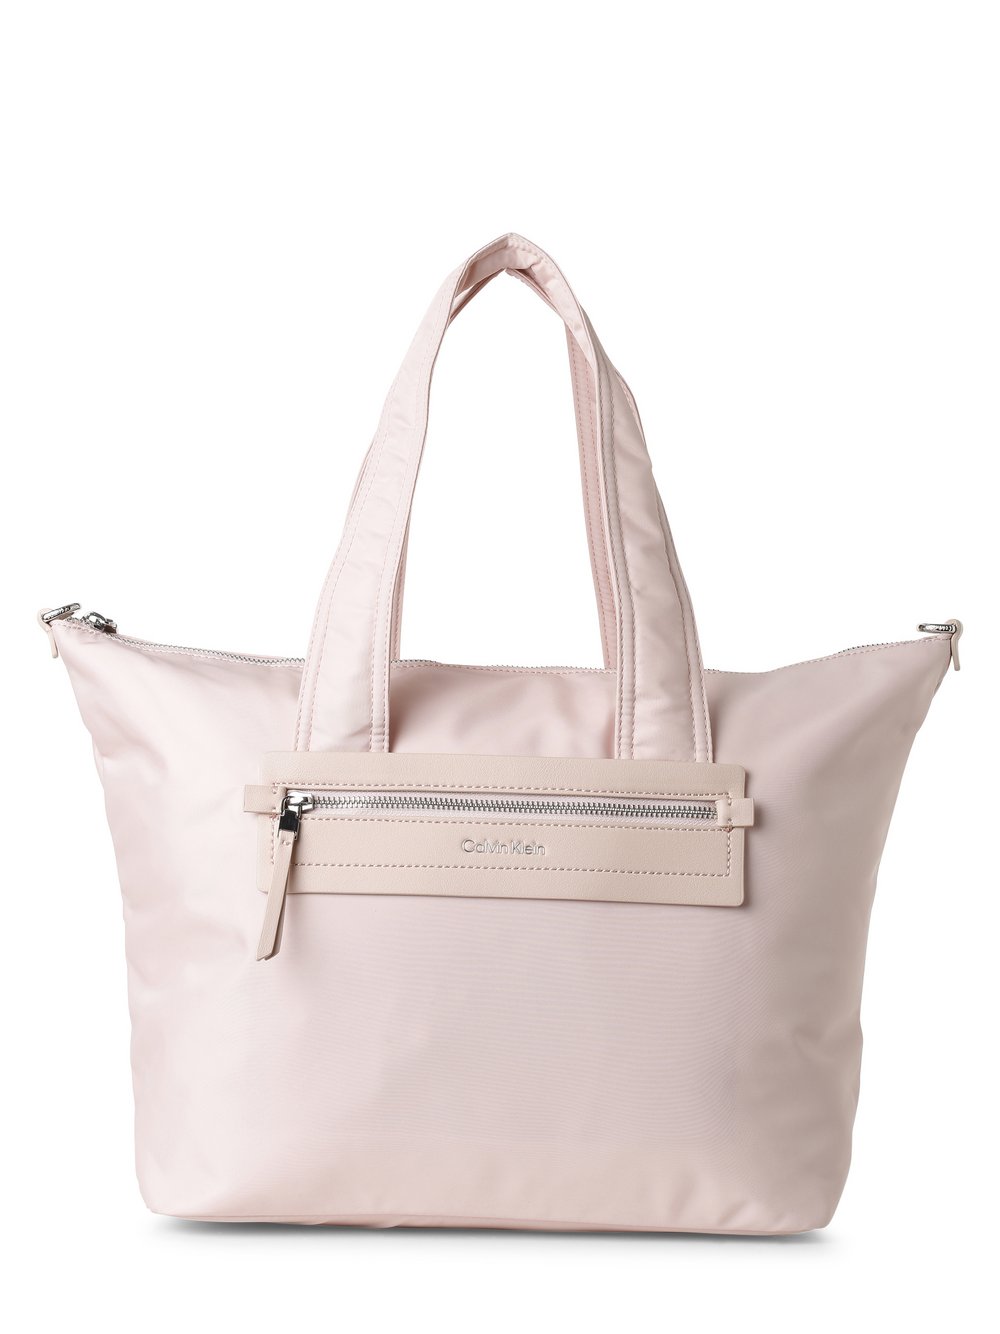 Calvin Klein - Damska torba shopper, różowy